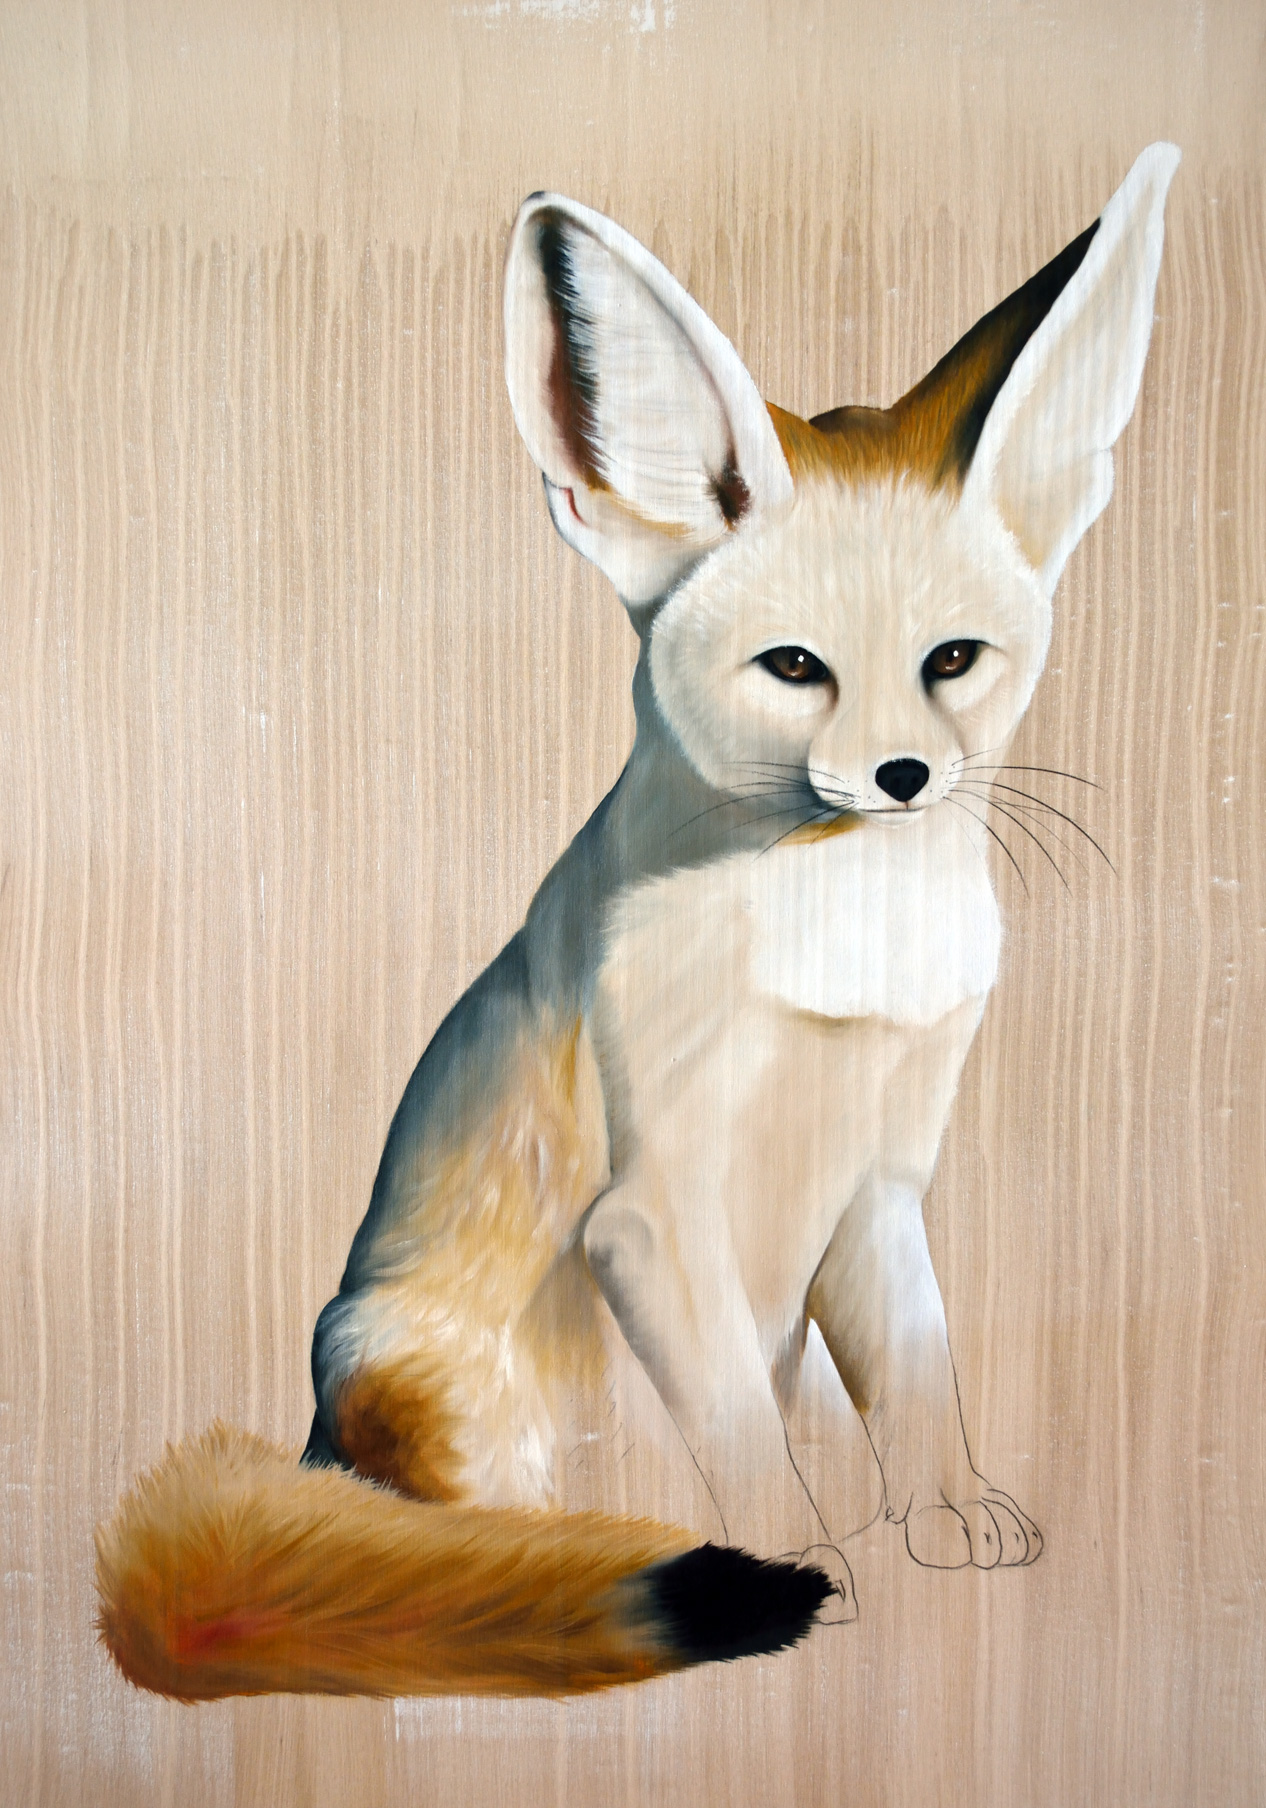 VULPUS-ZERDA peinture-animalière Thierry Bisch artiste peintre contemporain animaux tableau art décoration biodiversité conservation 